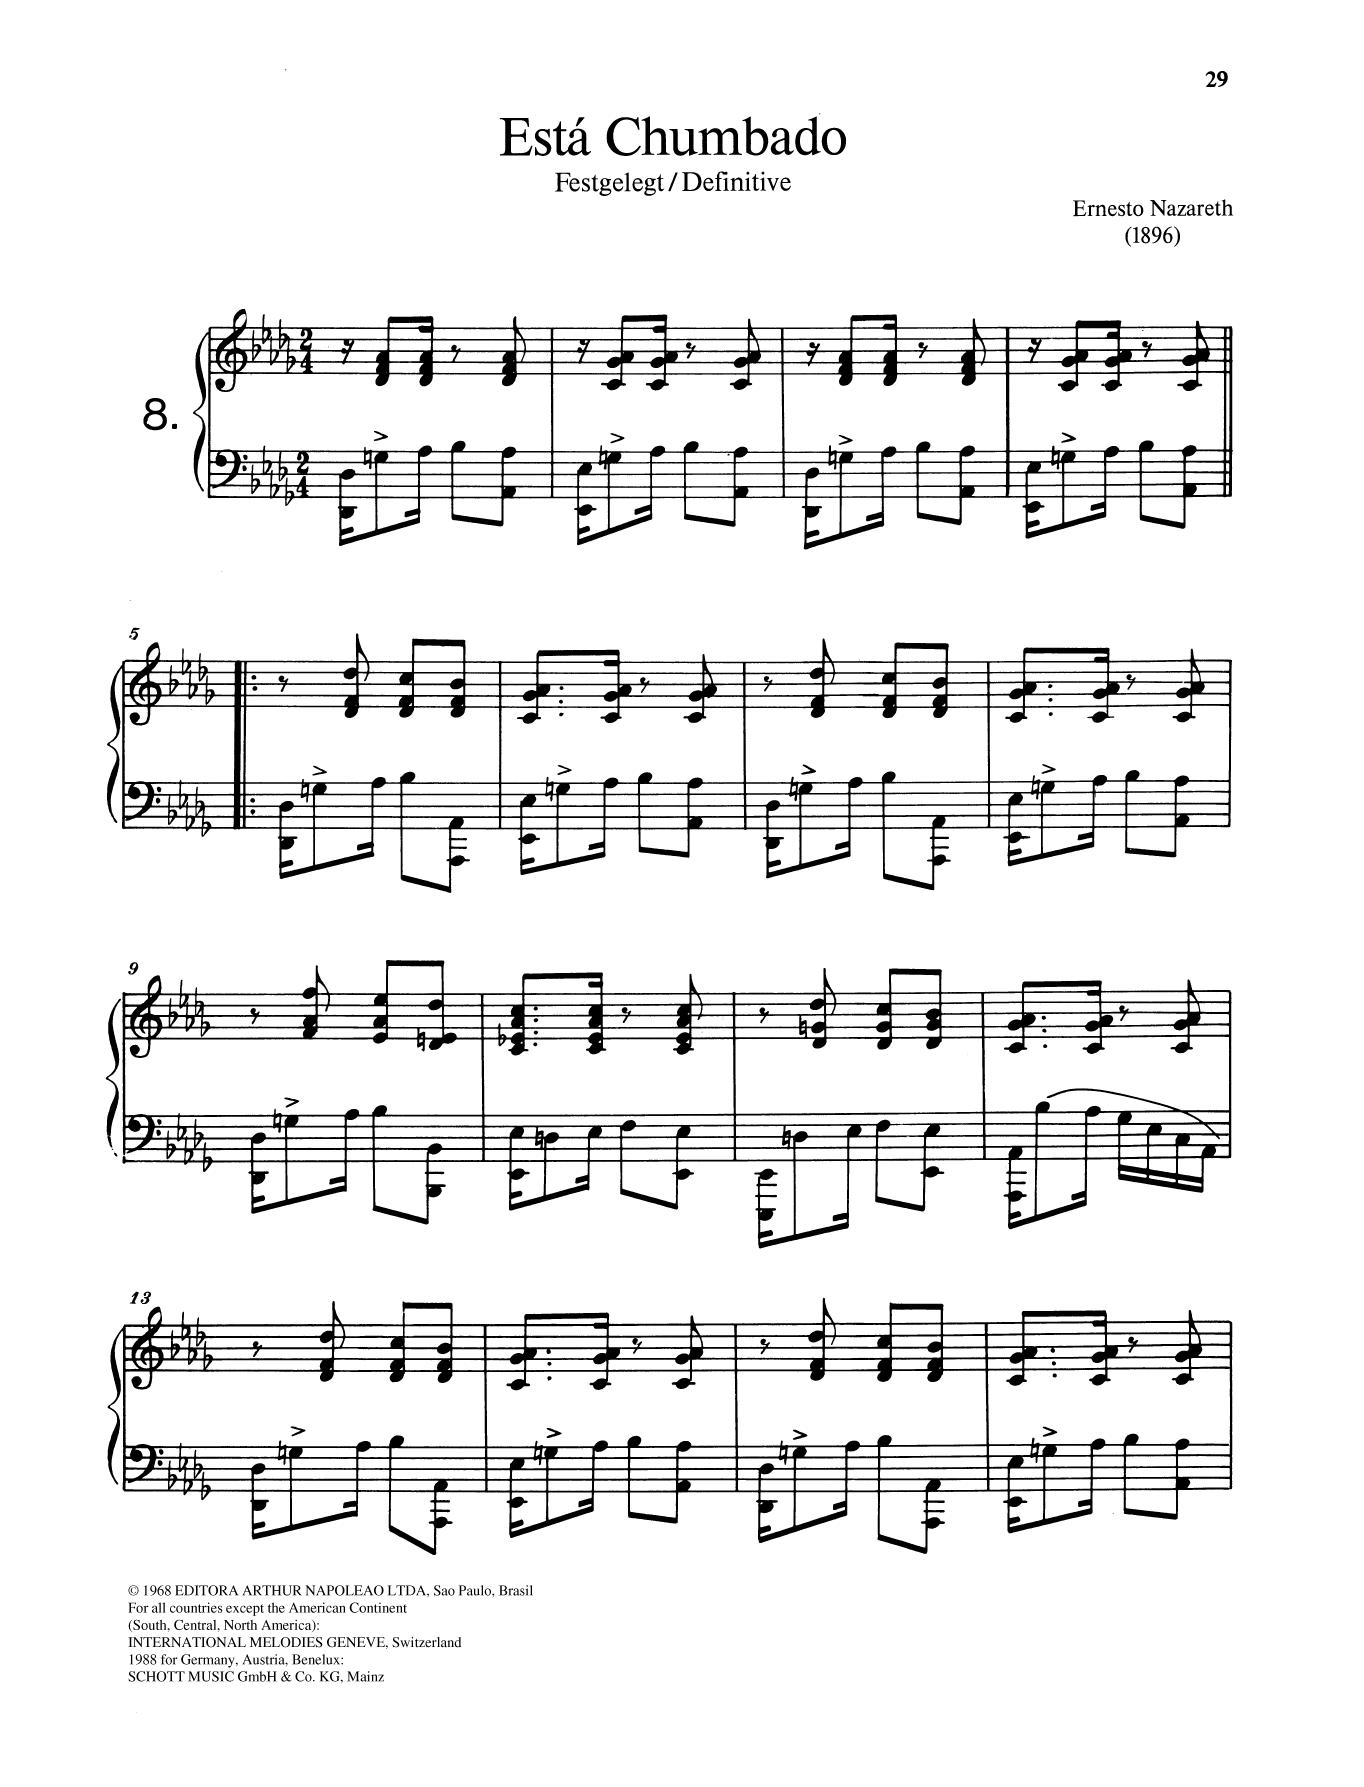 Ernesto Nazareth Está Chumbado Sheet Music Notes & Chords for Piano Solo - Download or Print PDF